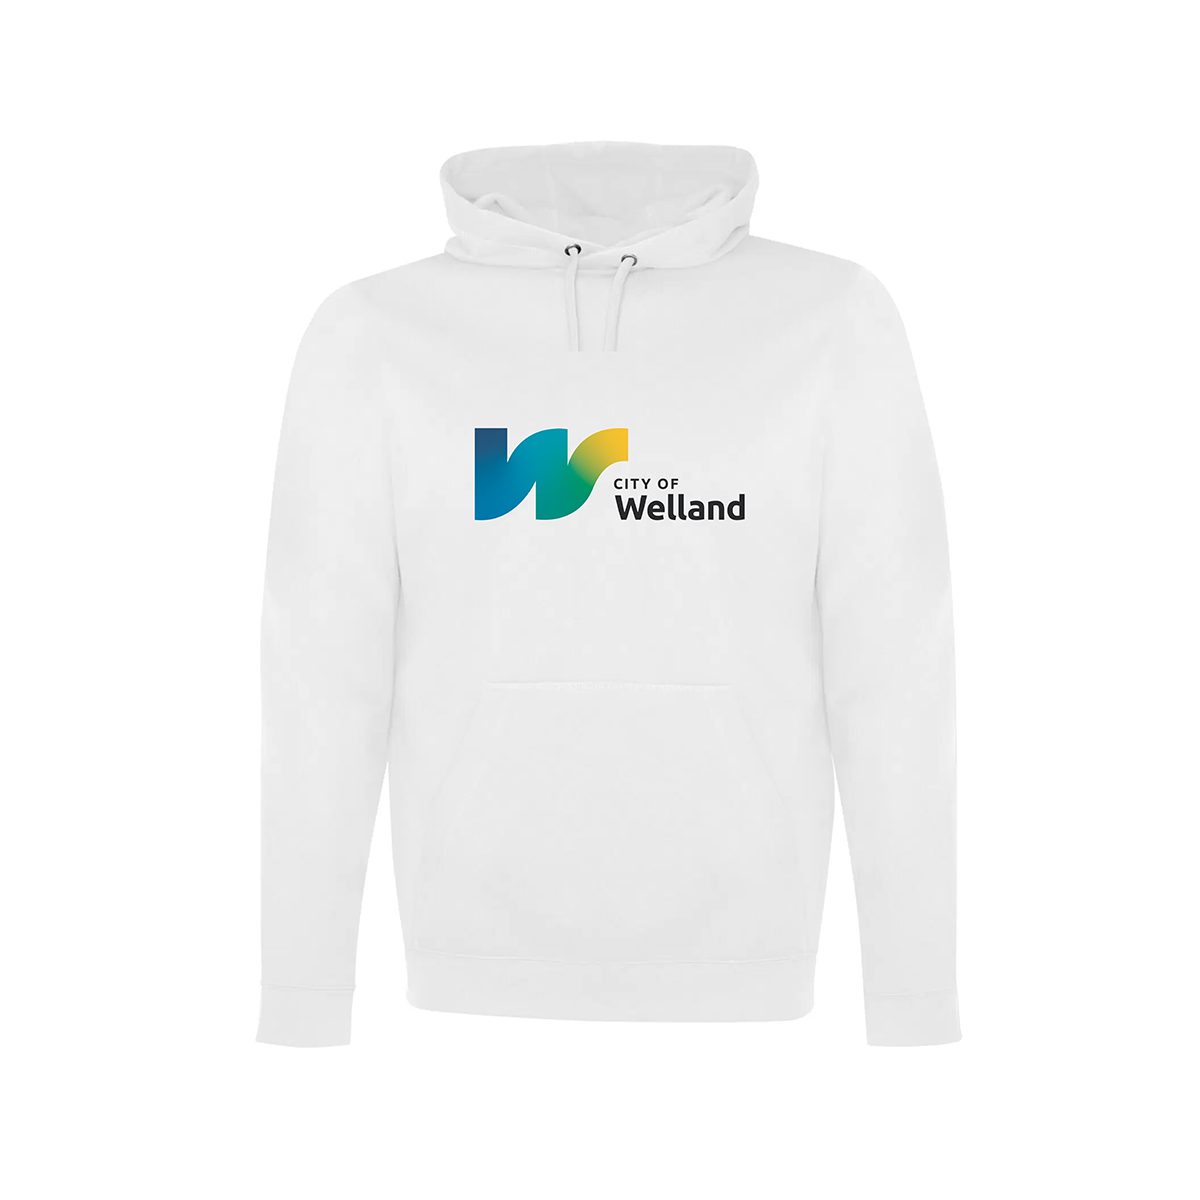 City-of-Welland-Merch-Store_V7-F2005-White-Front-Wellnd-Logo